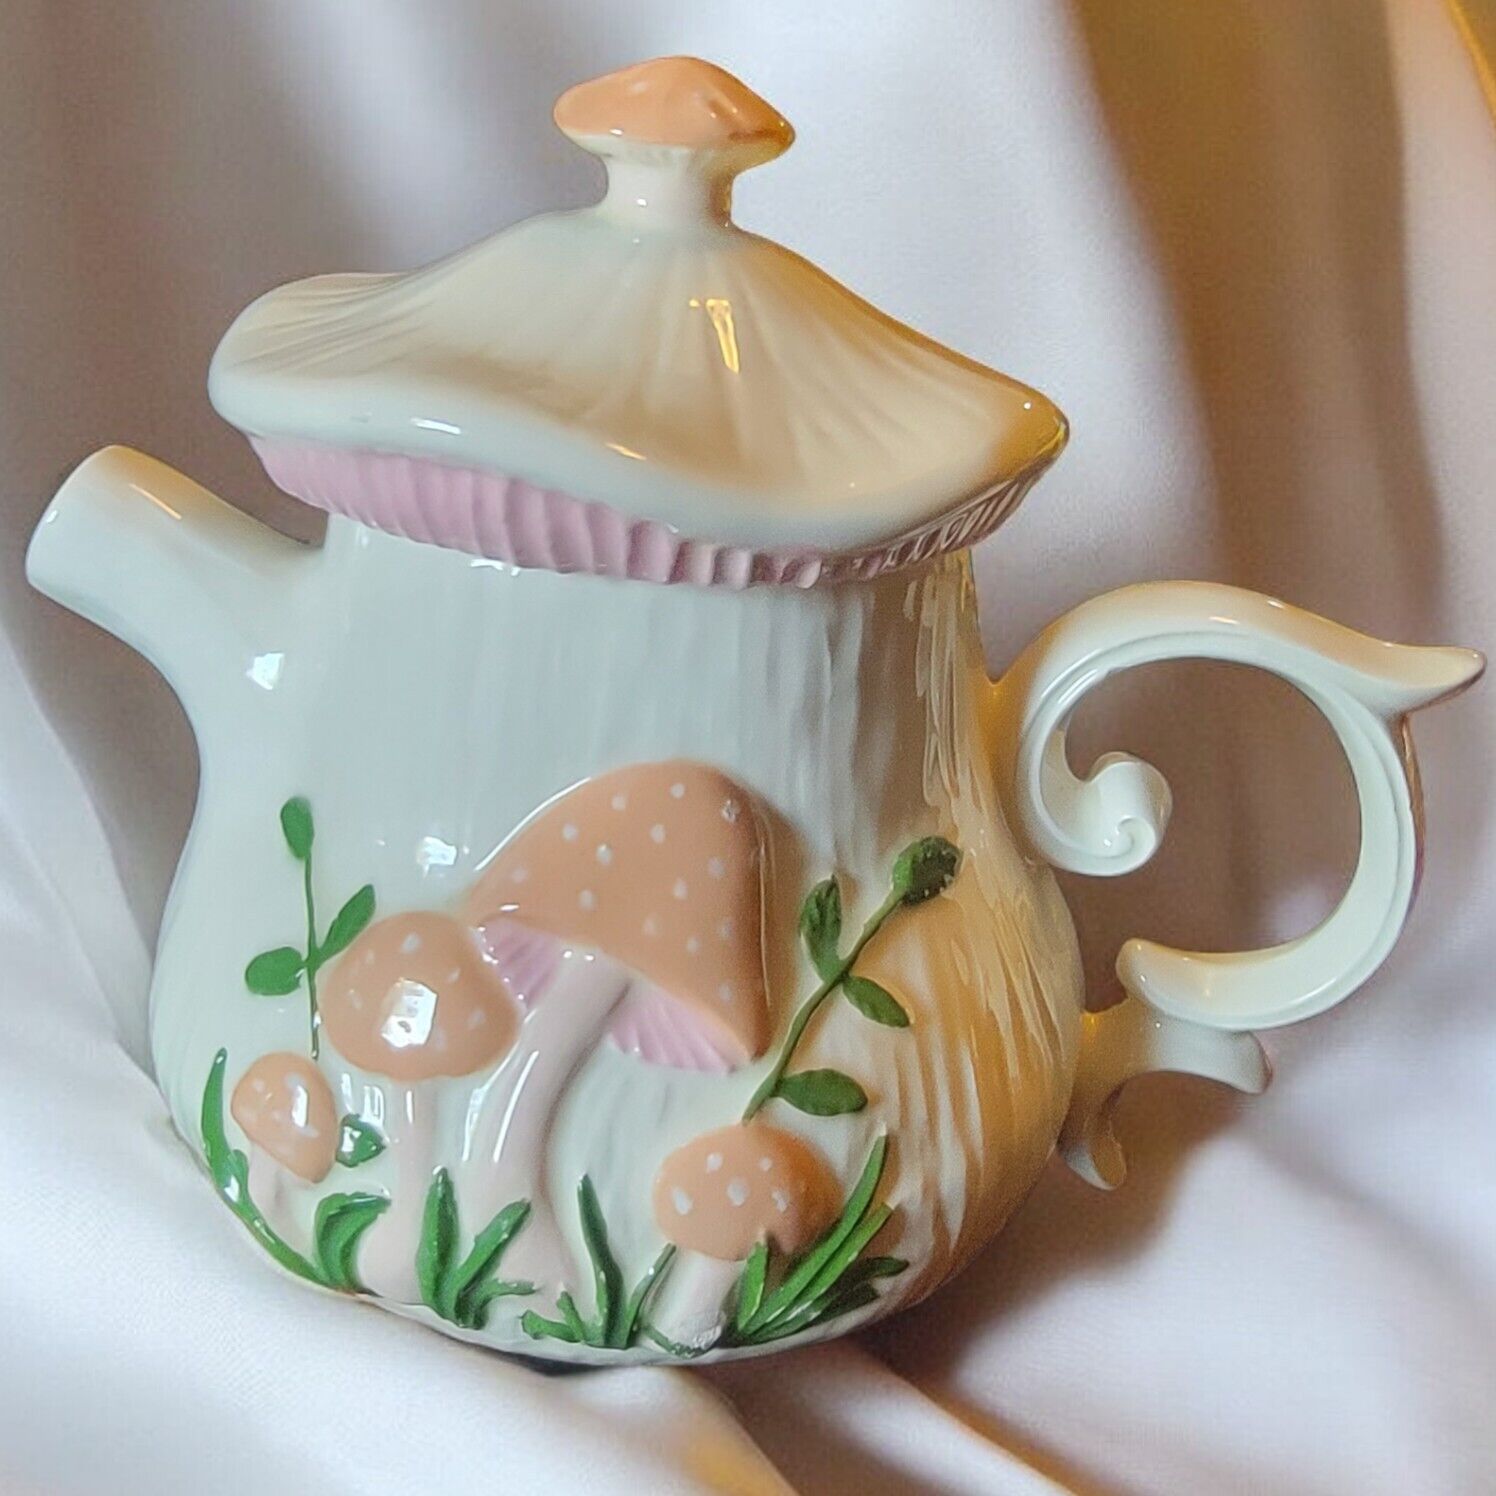 Vintage Arnel's Short Ceramic Mushroom Teapot With Lid Pink and White